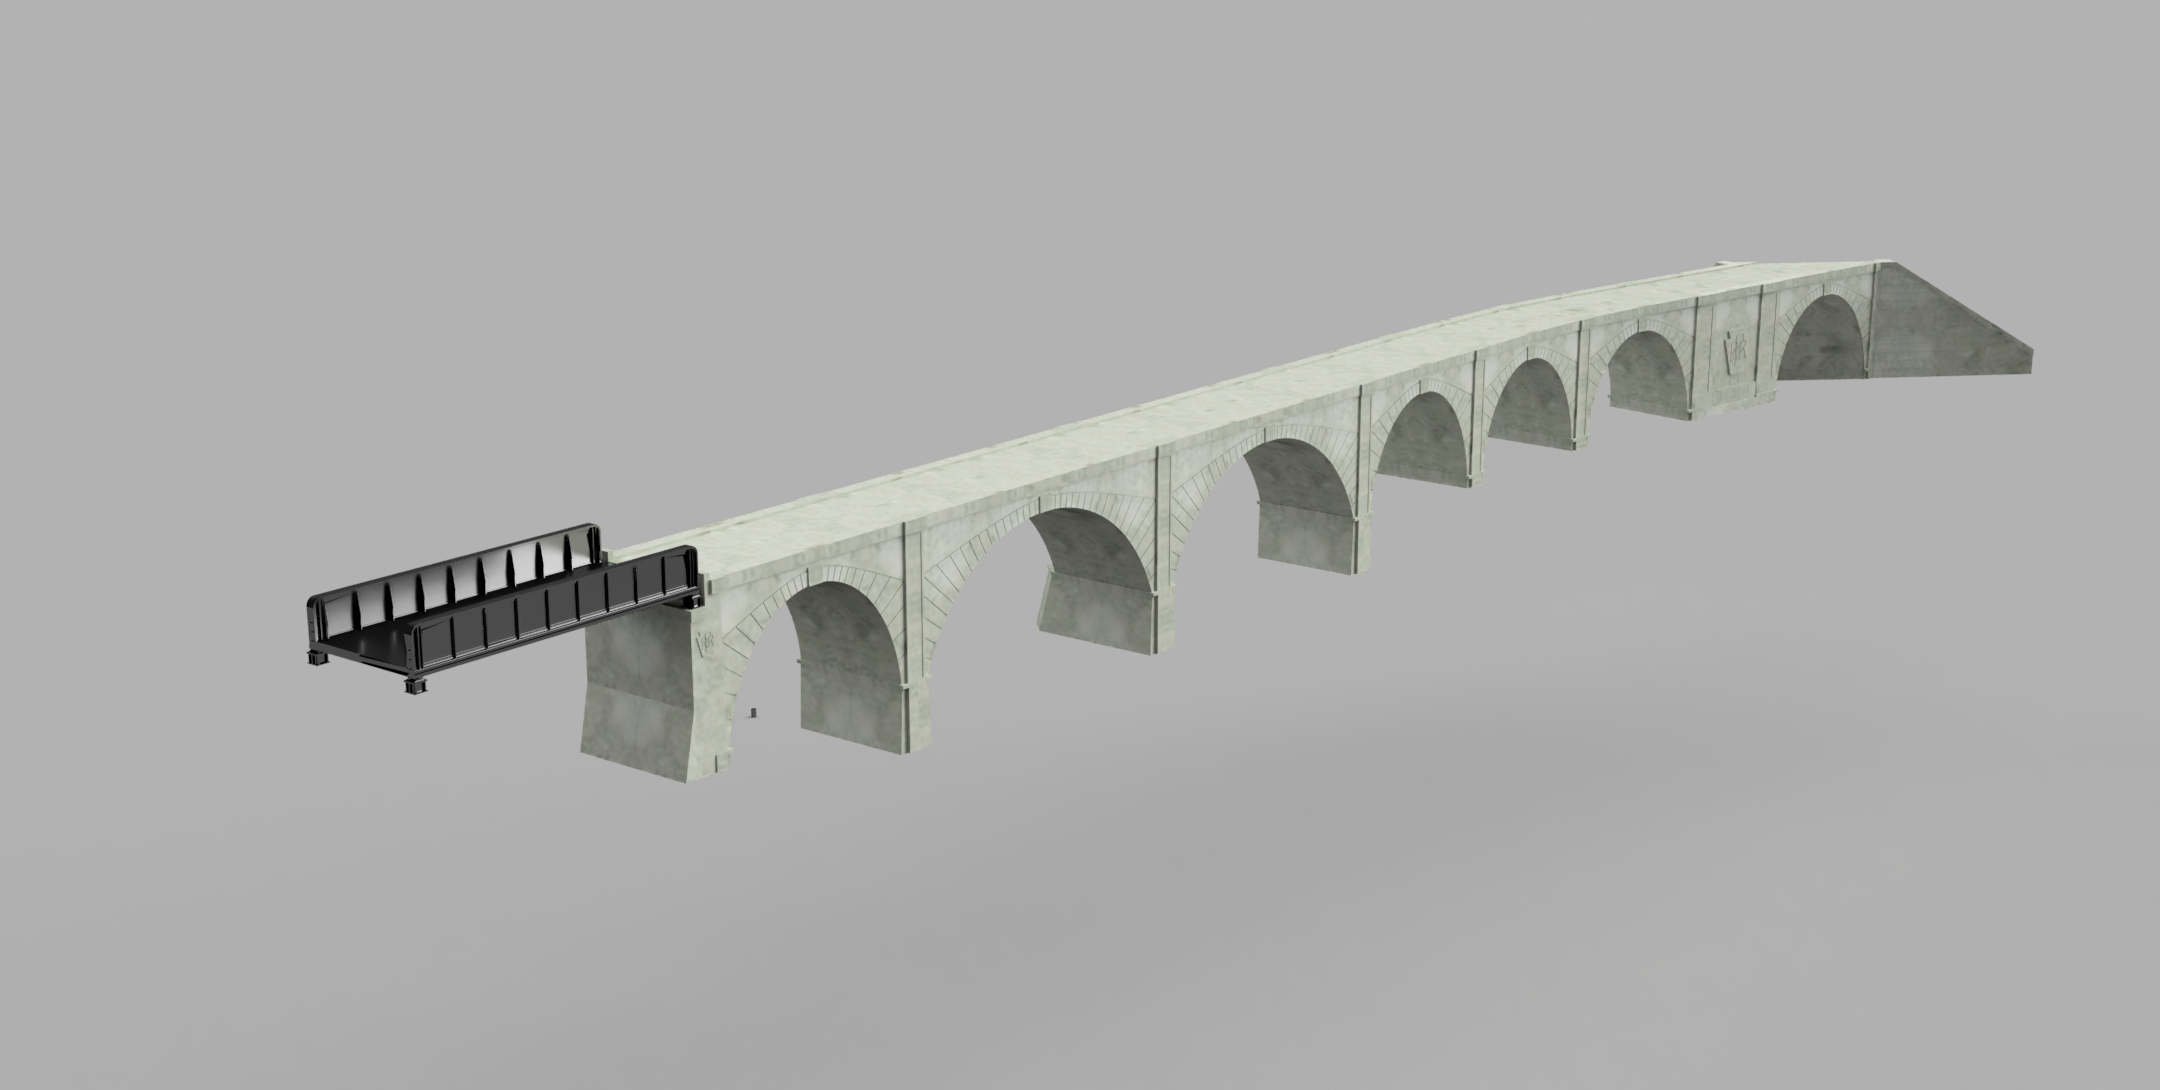 Phoenixville Viaduct Model Railroad Bridge